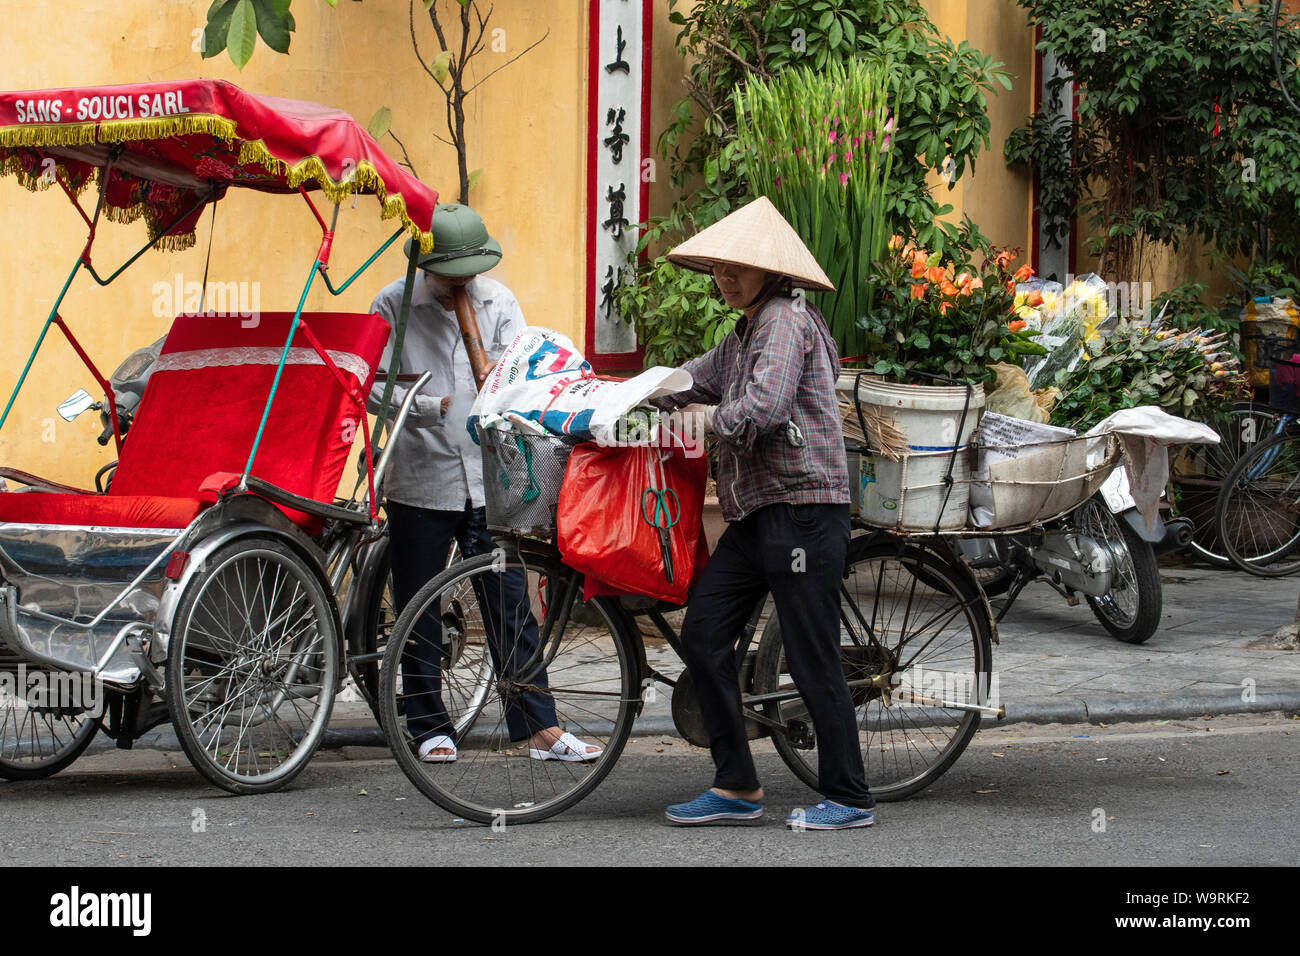 Asien, Asien, Südostasien, Vietnam, Nord, Hanoi Street *** Local Caption *** Stockfoto